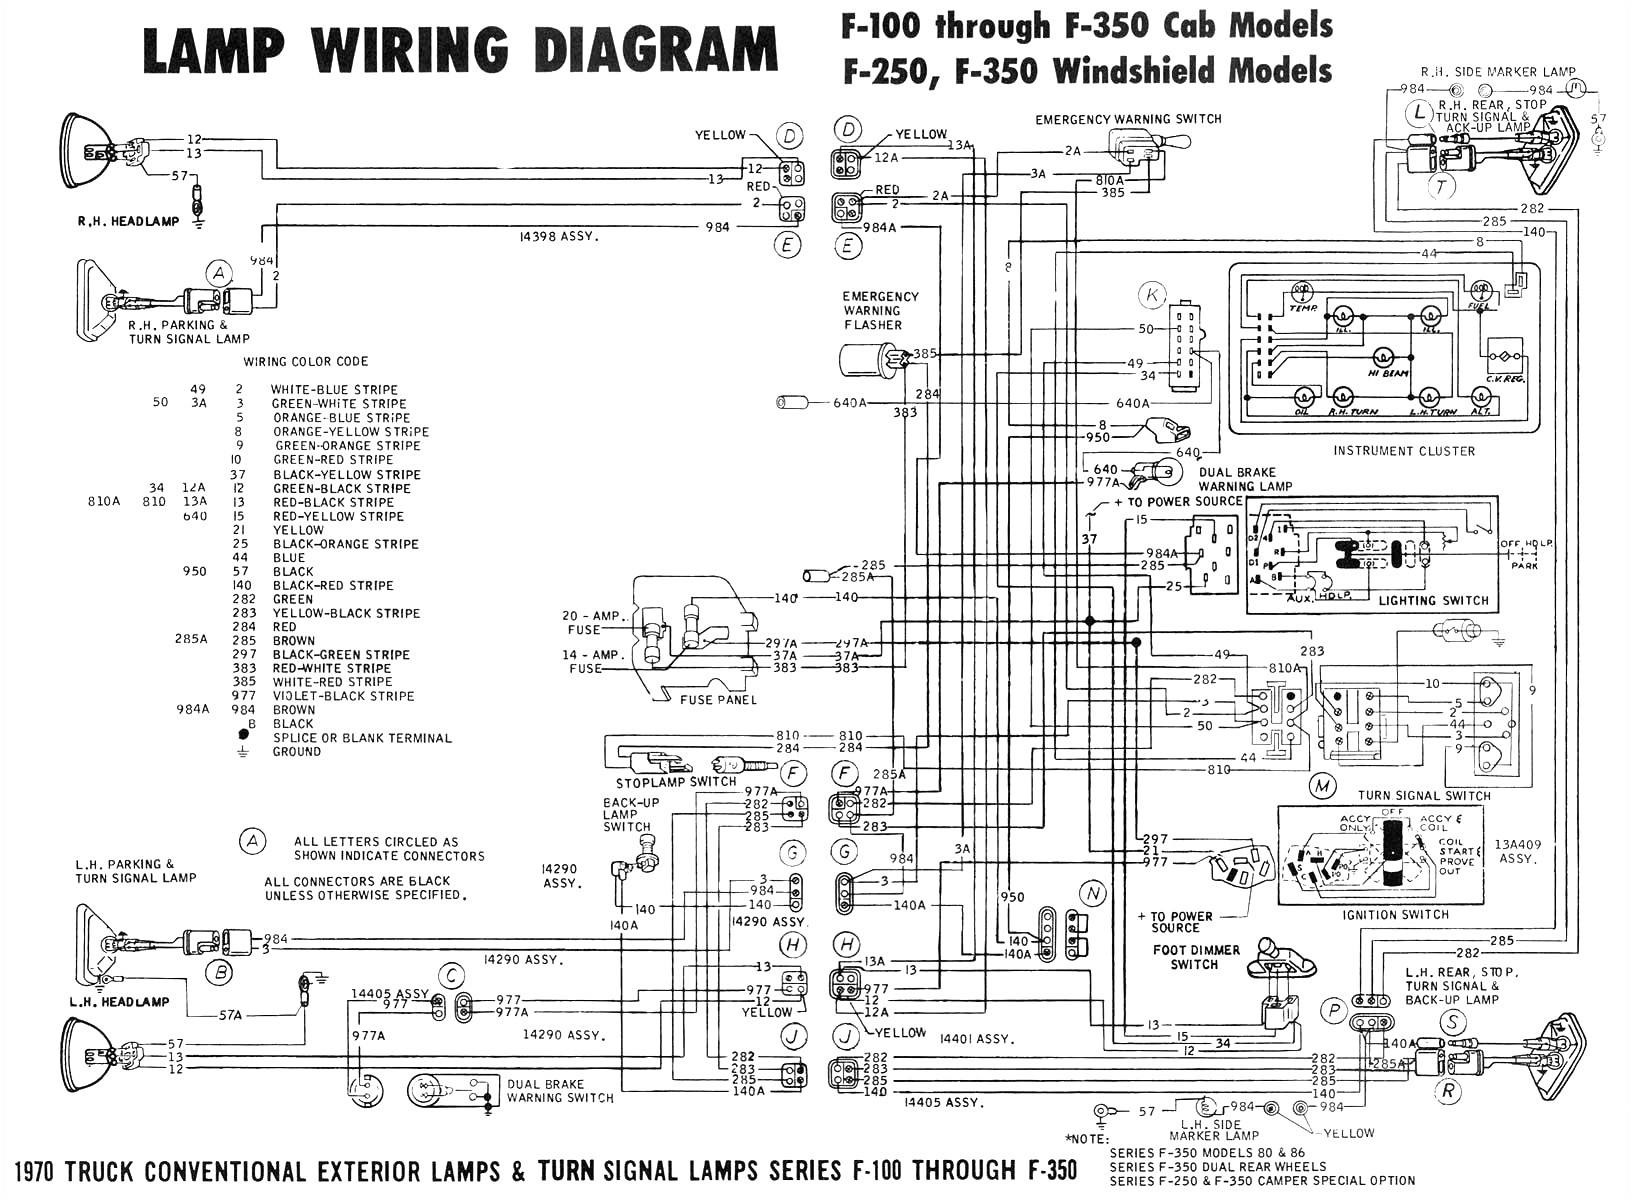 1998 chevy lumina fuse box diagram wiring schematic wiring diagram 1995 chevy lumina engine diagram moreover 1998 ford f 150 fuse diagram